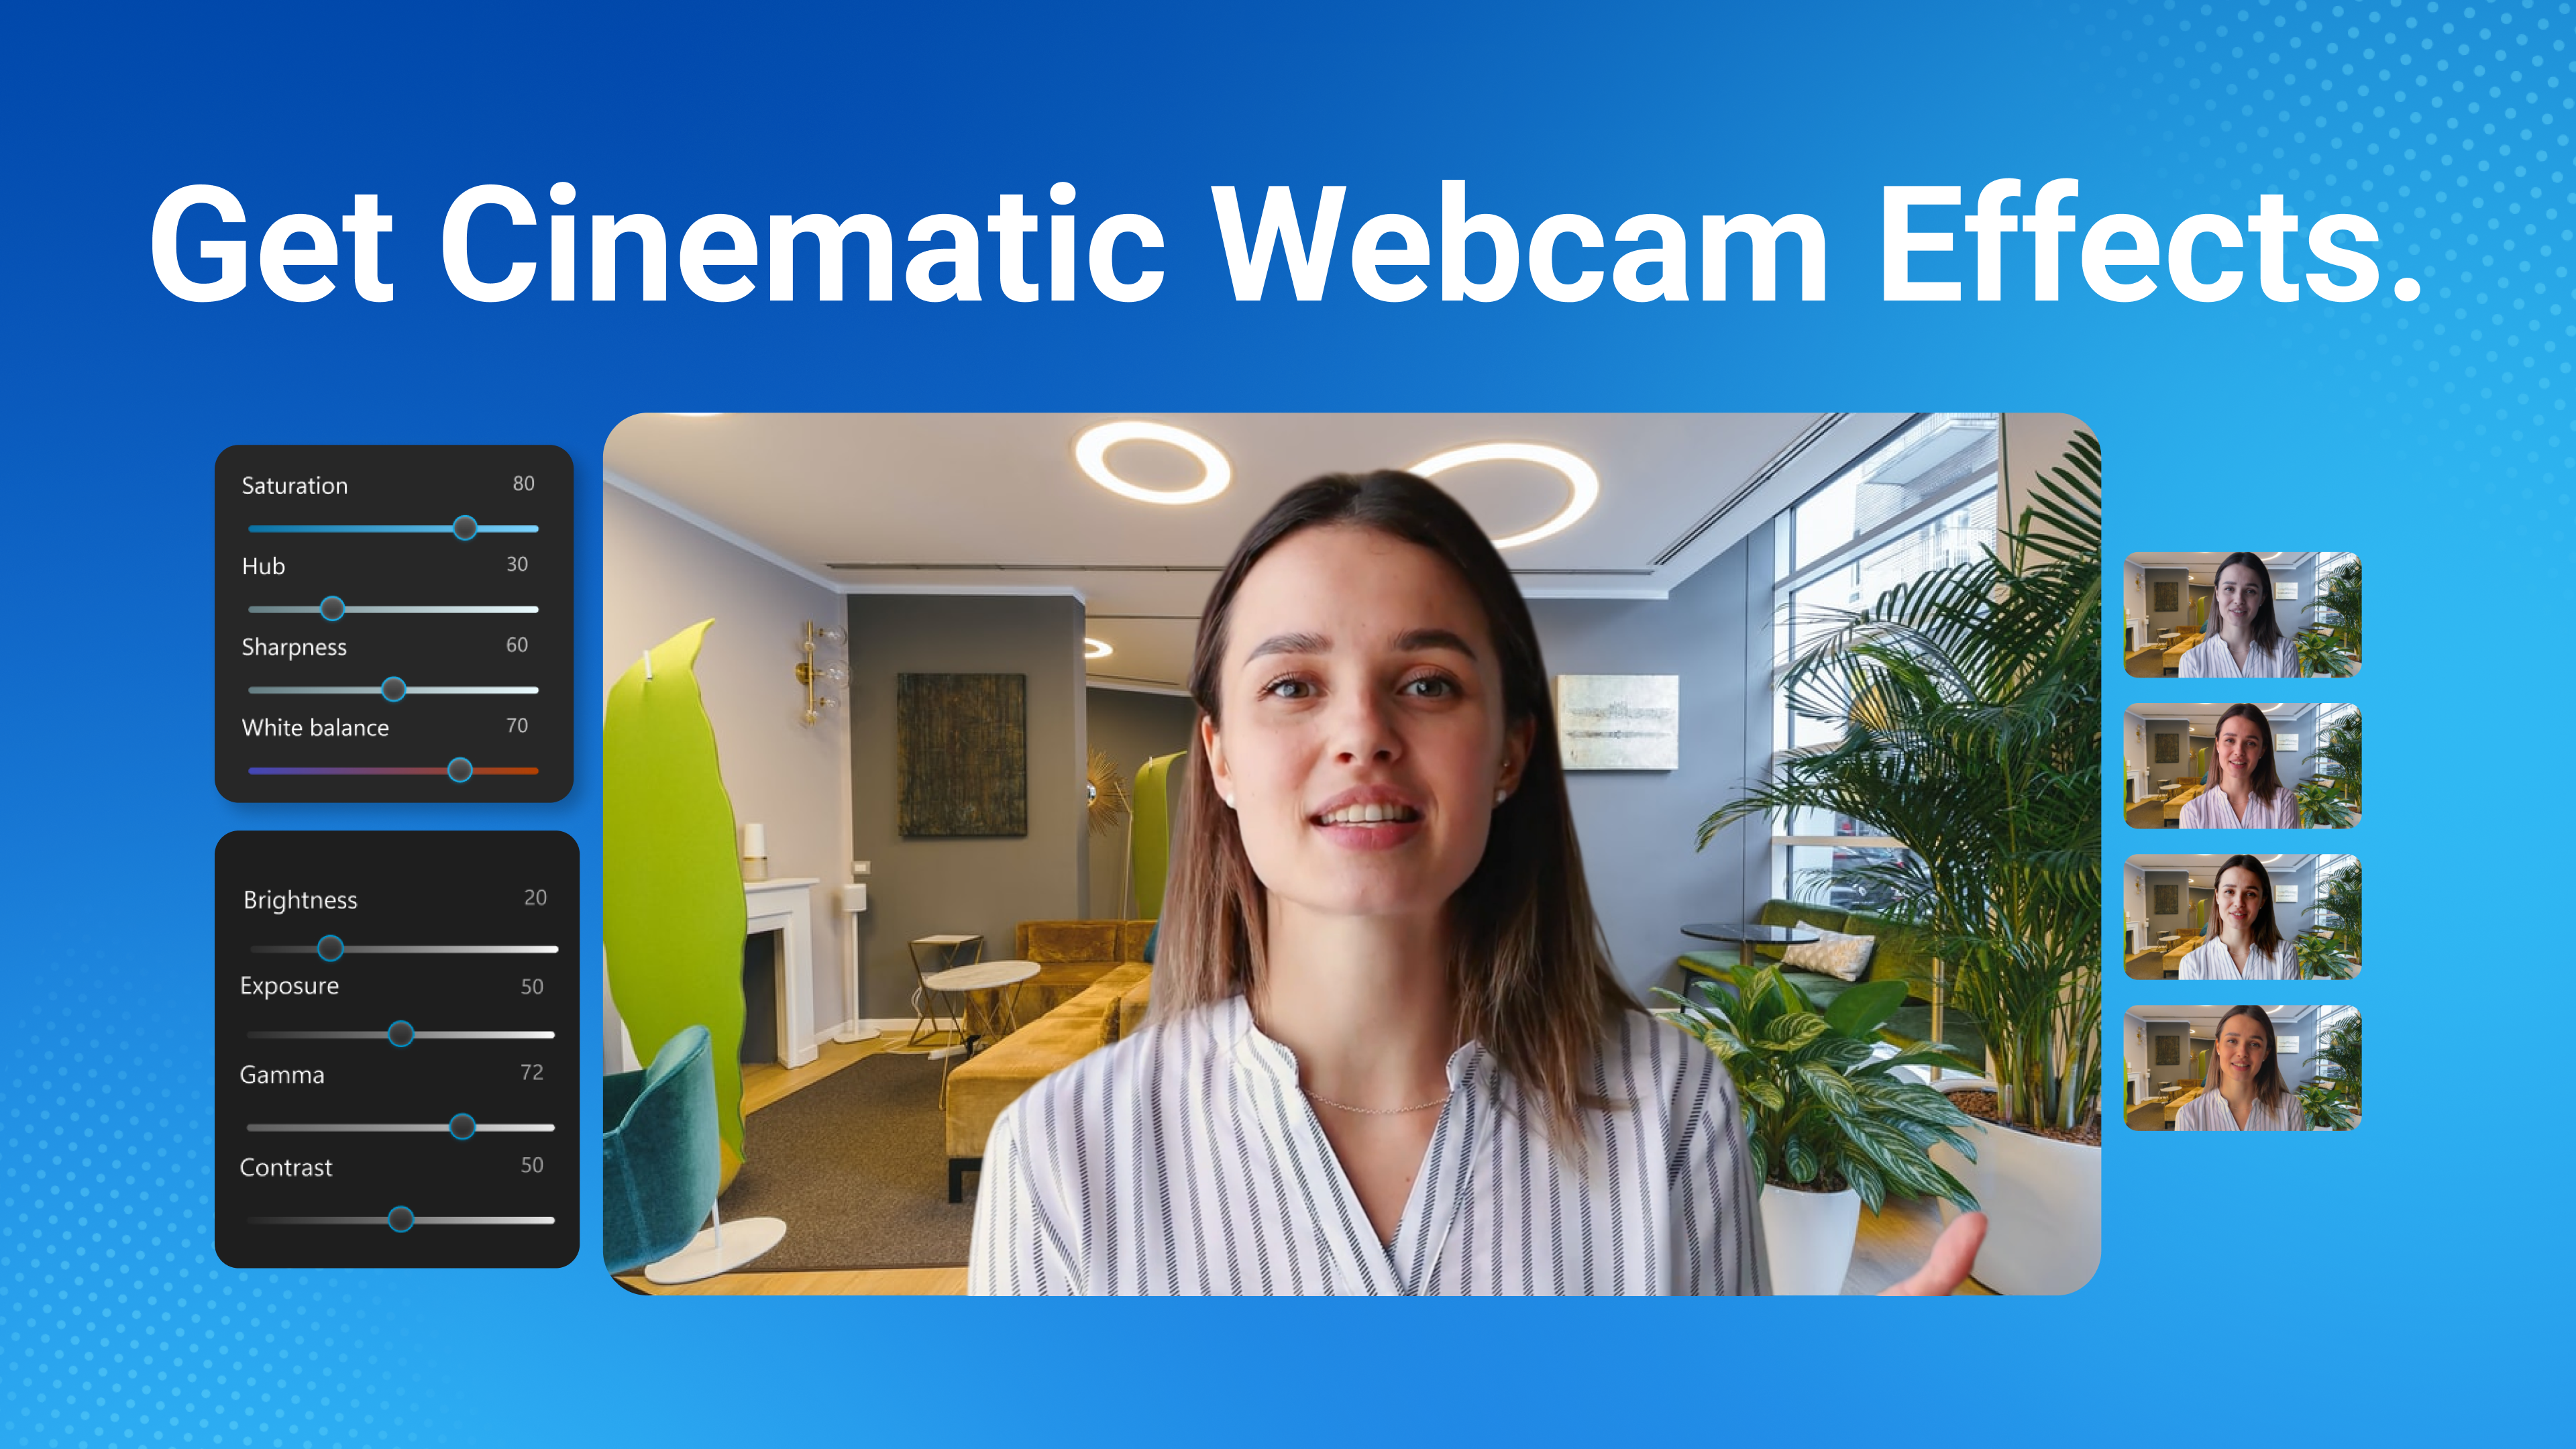 Get Cinematic Webcam Effects